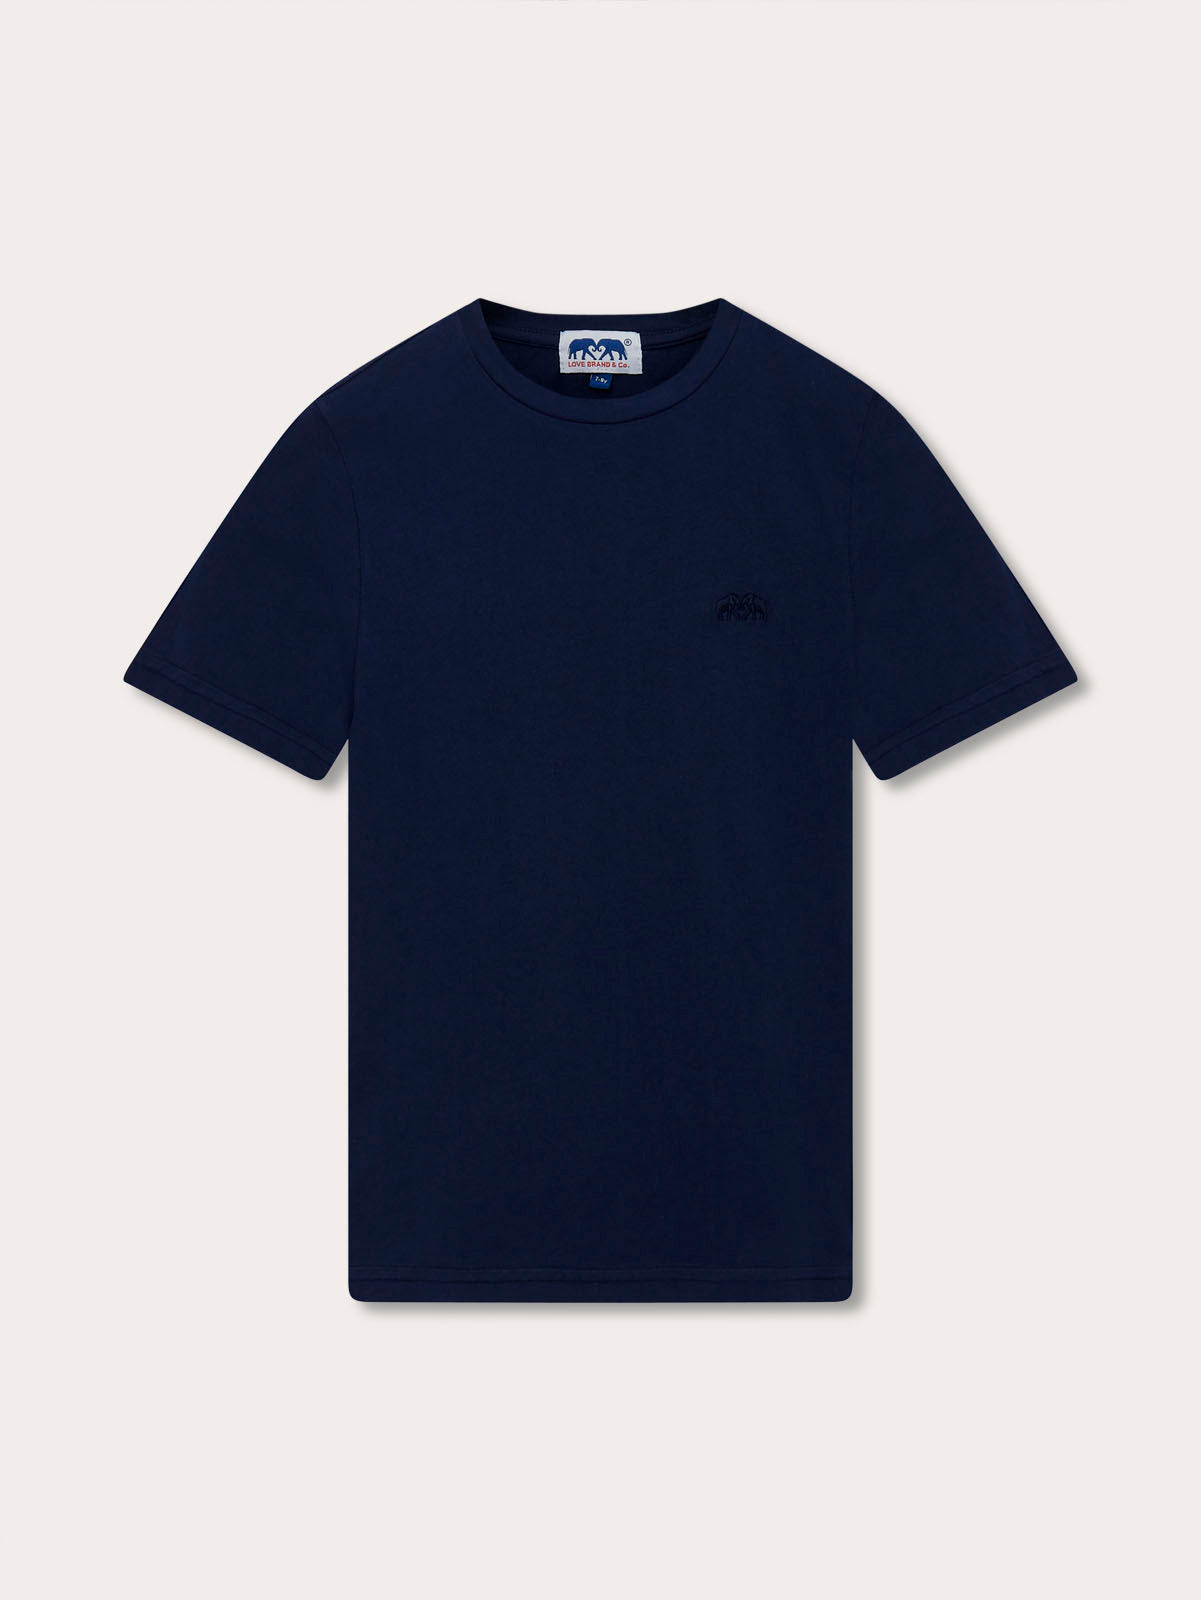 Boys Navy Blue Lockhart T-Shirt